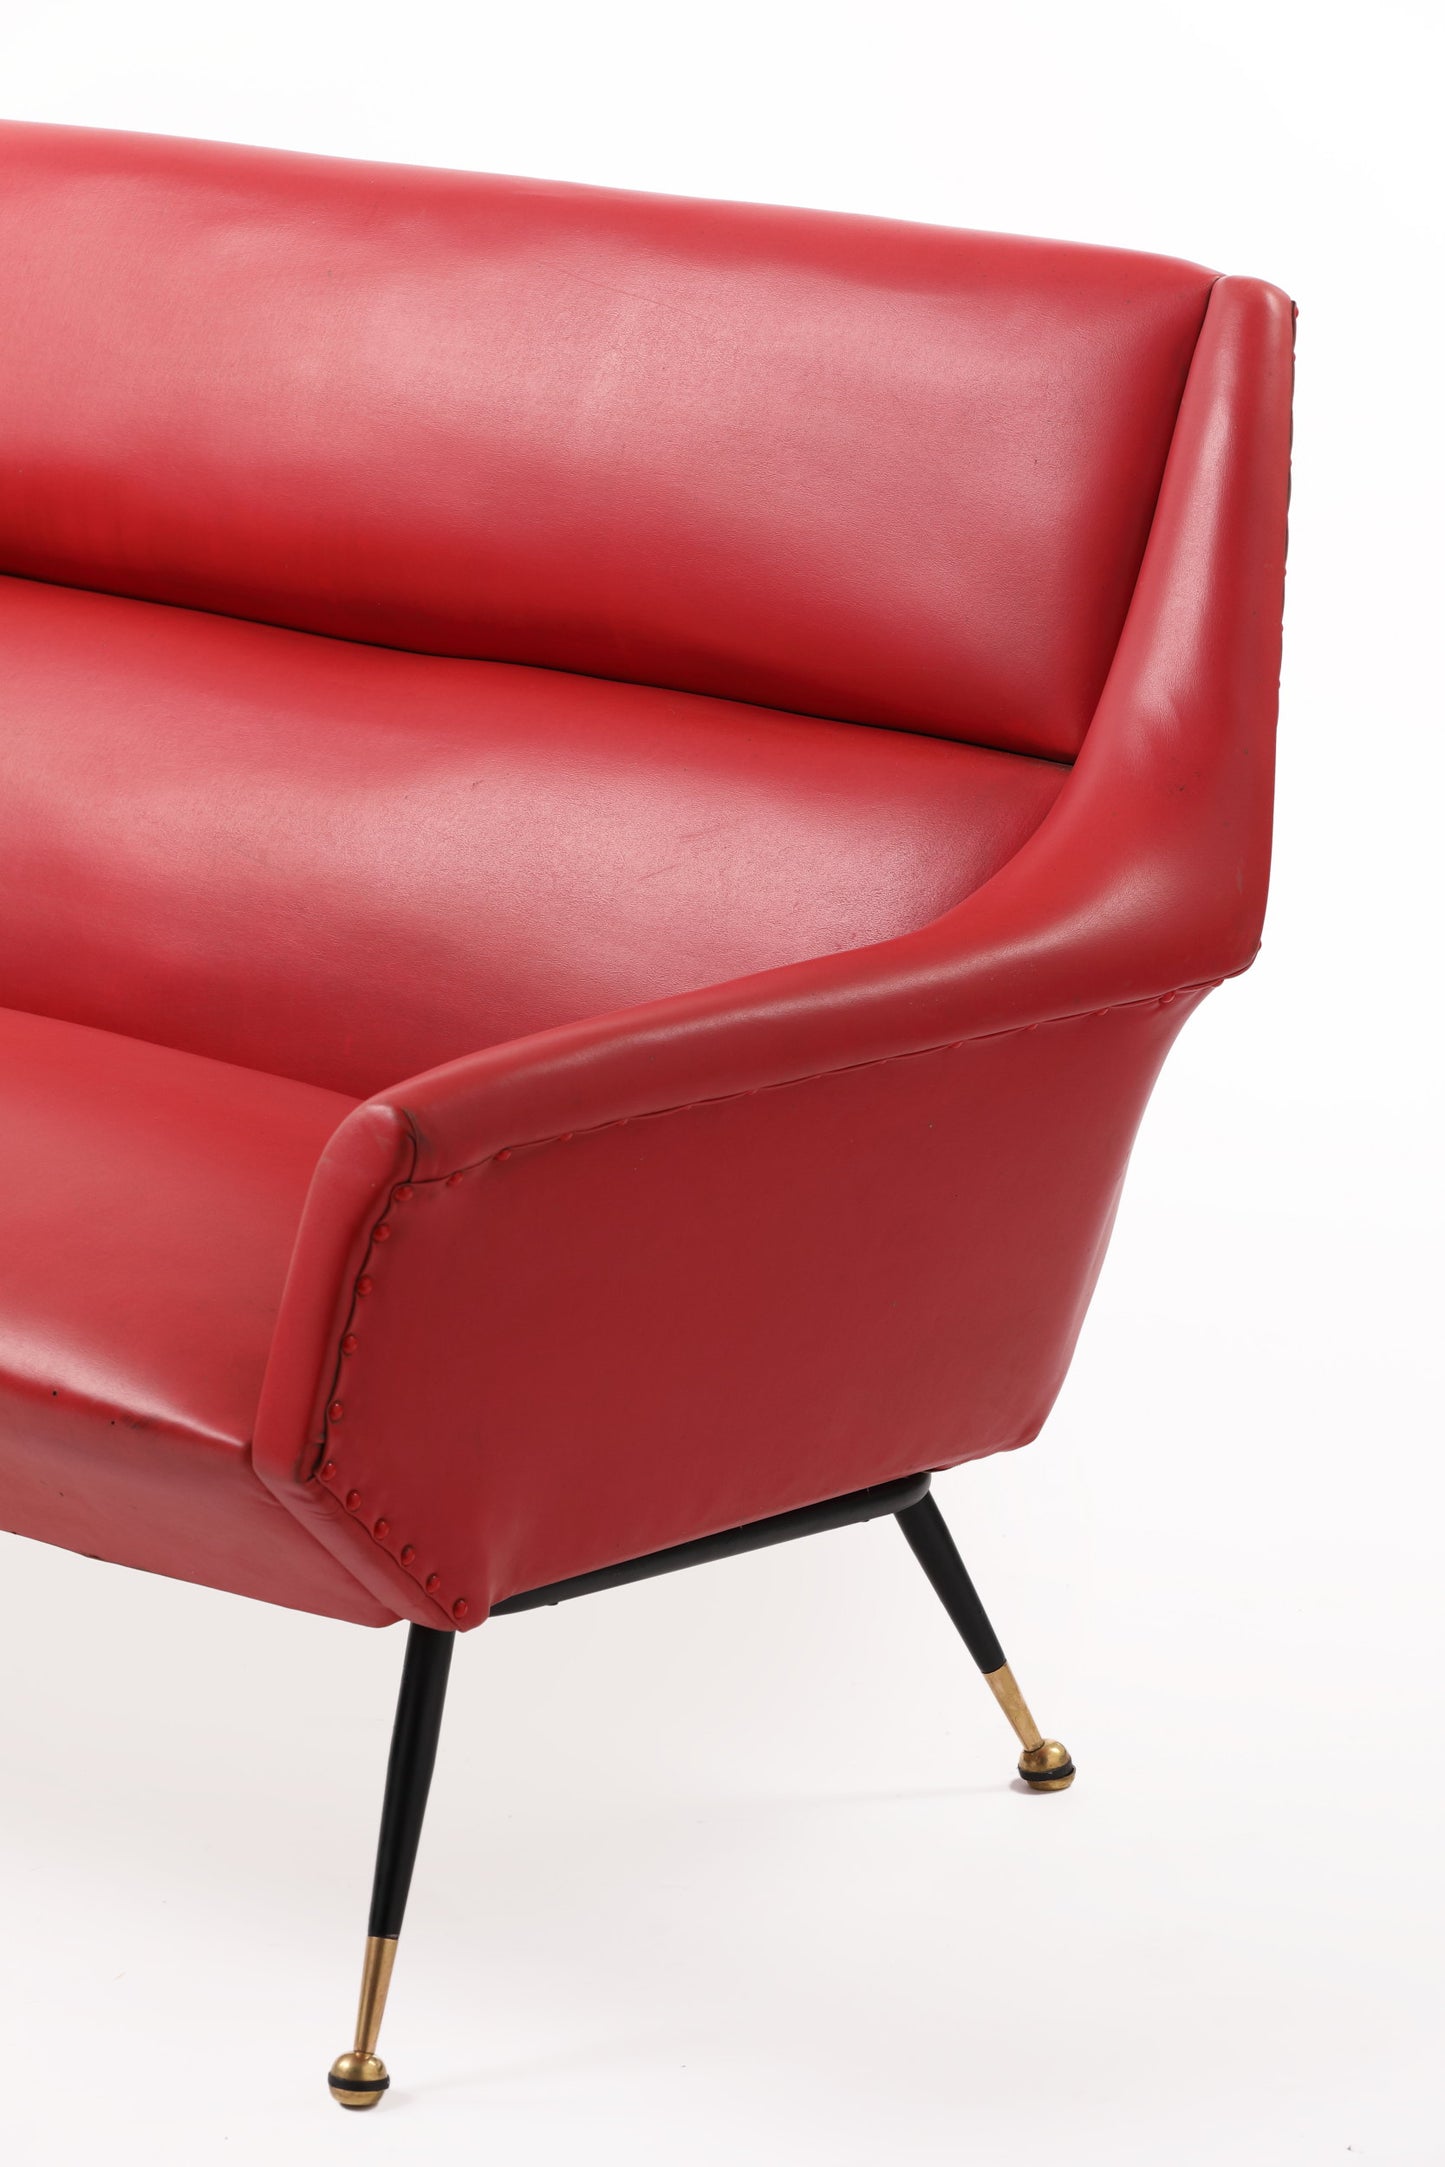 50's red skai sofa